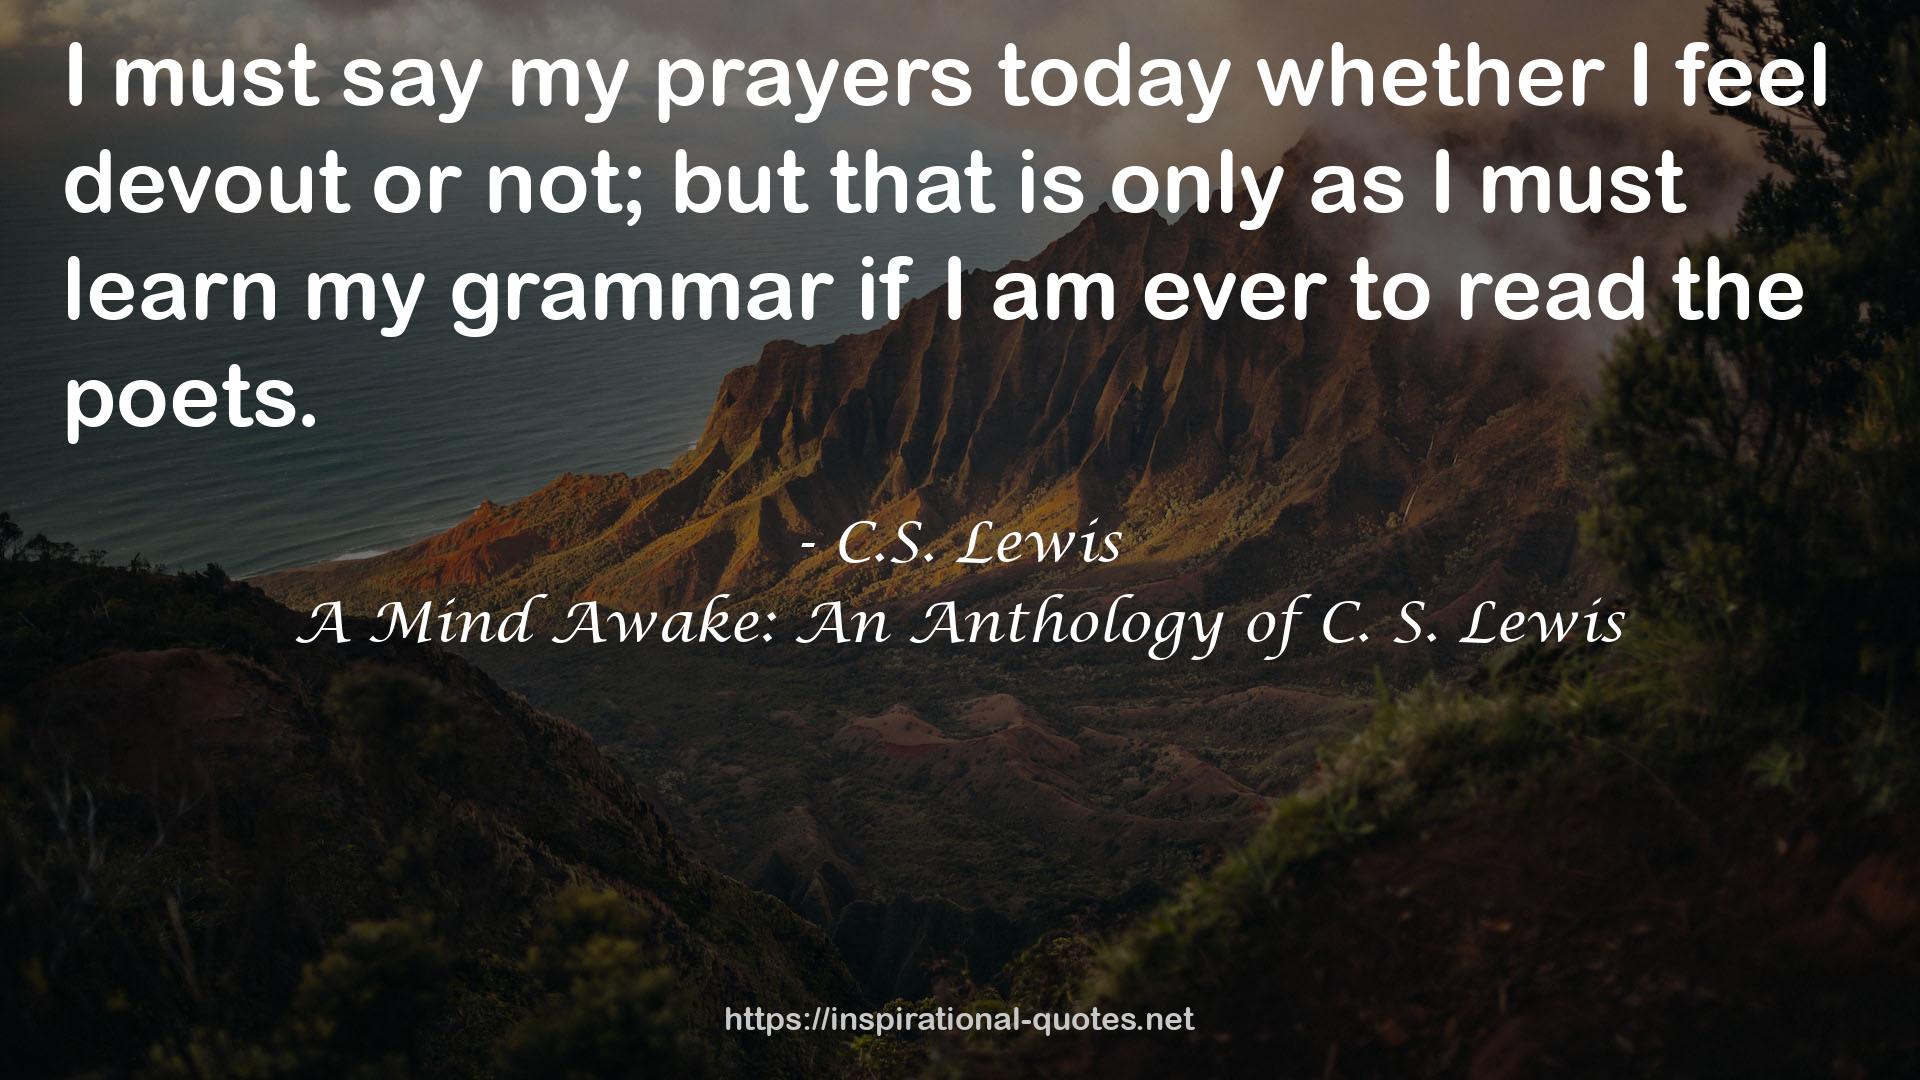 A Mind Awake: An Anthology of C. S. Lewis QUOTES